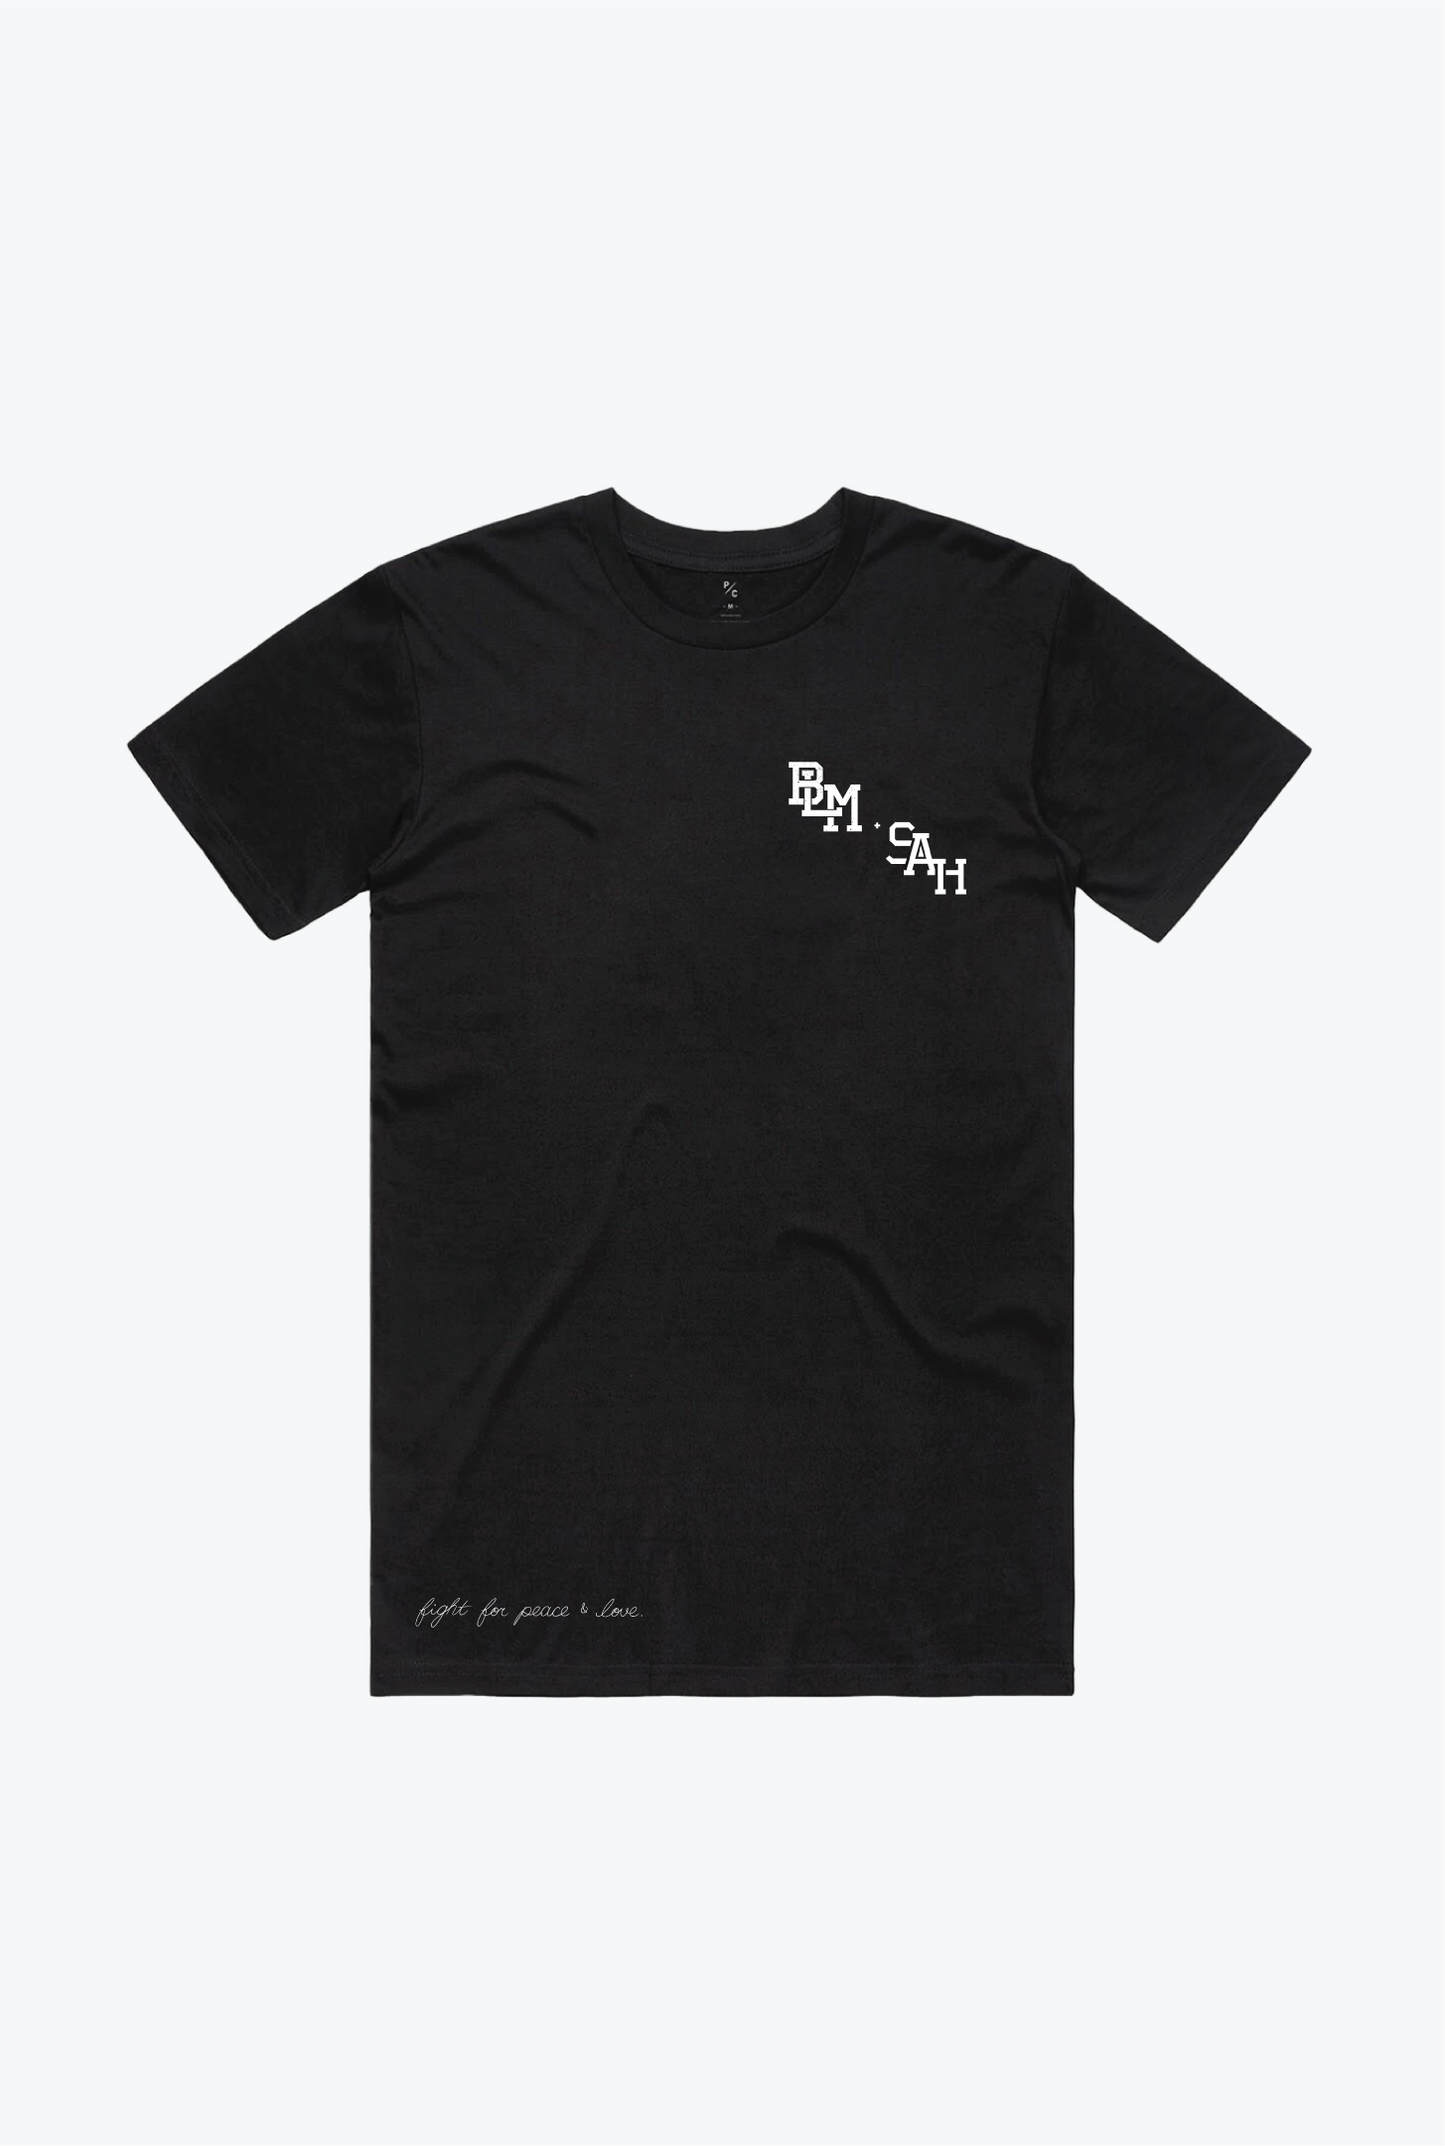 BLM x SAH T-Shirt - Black